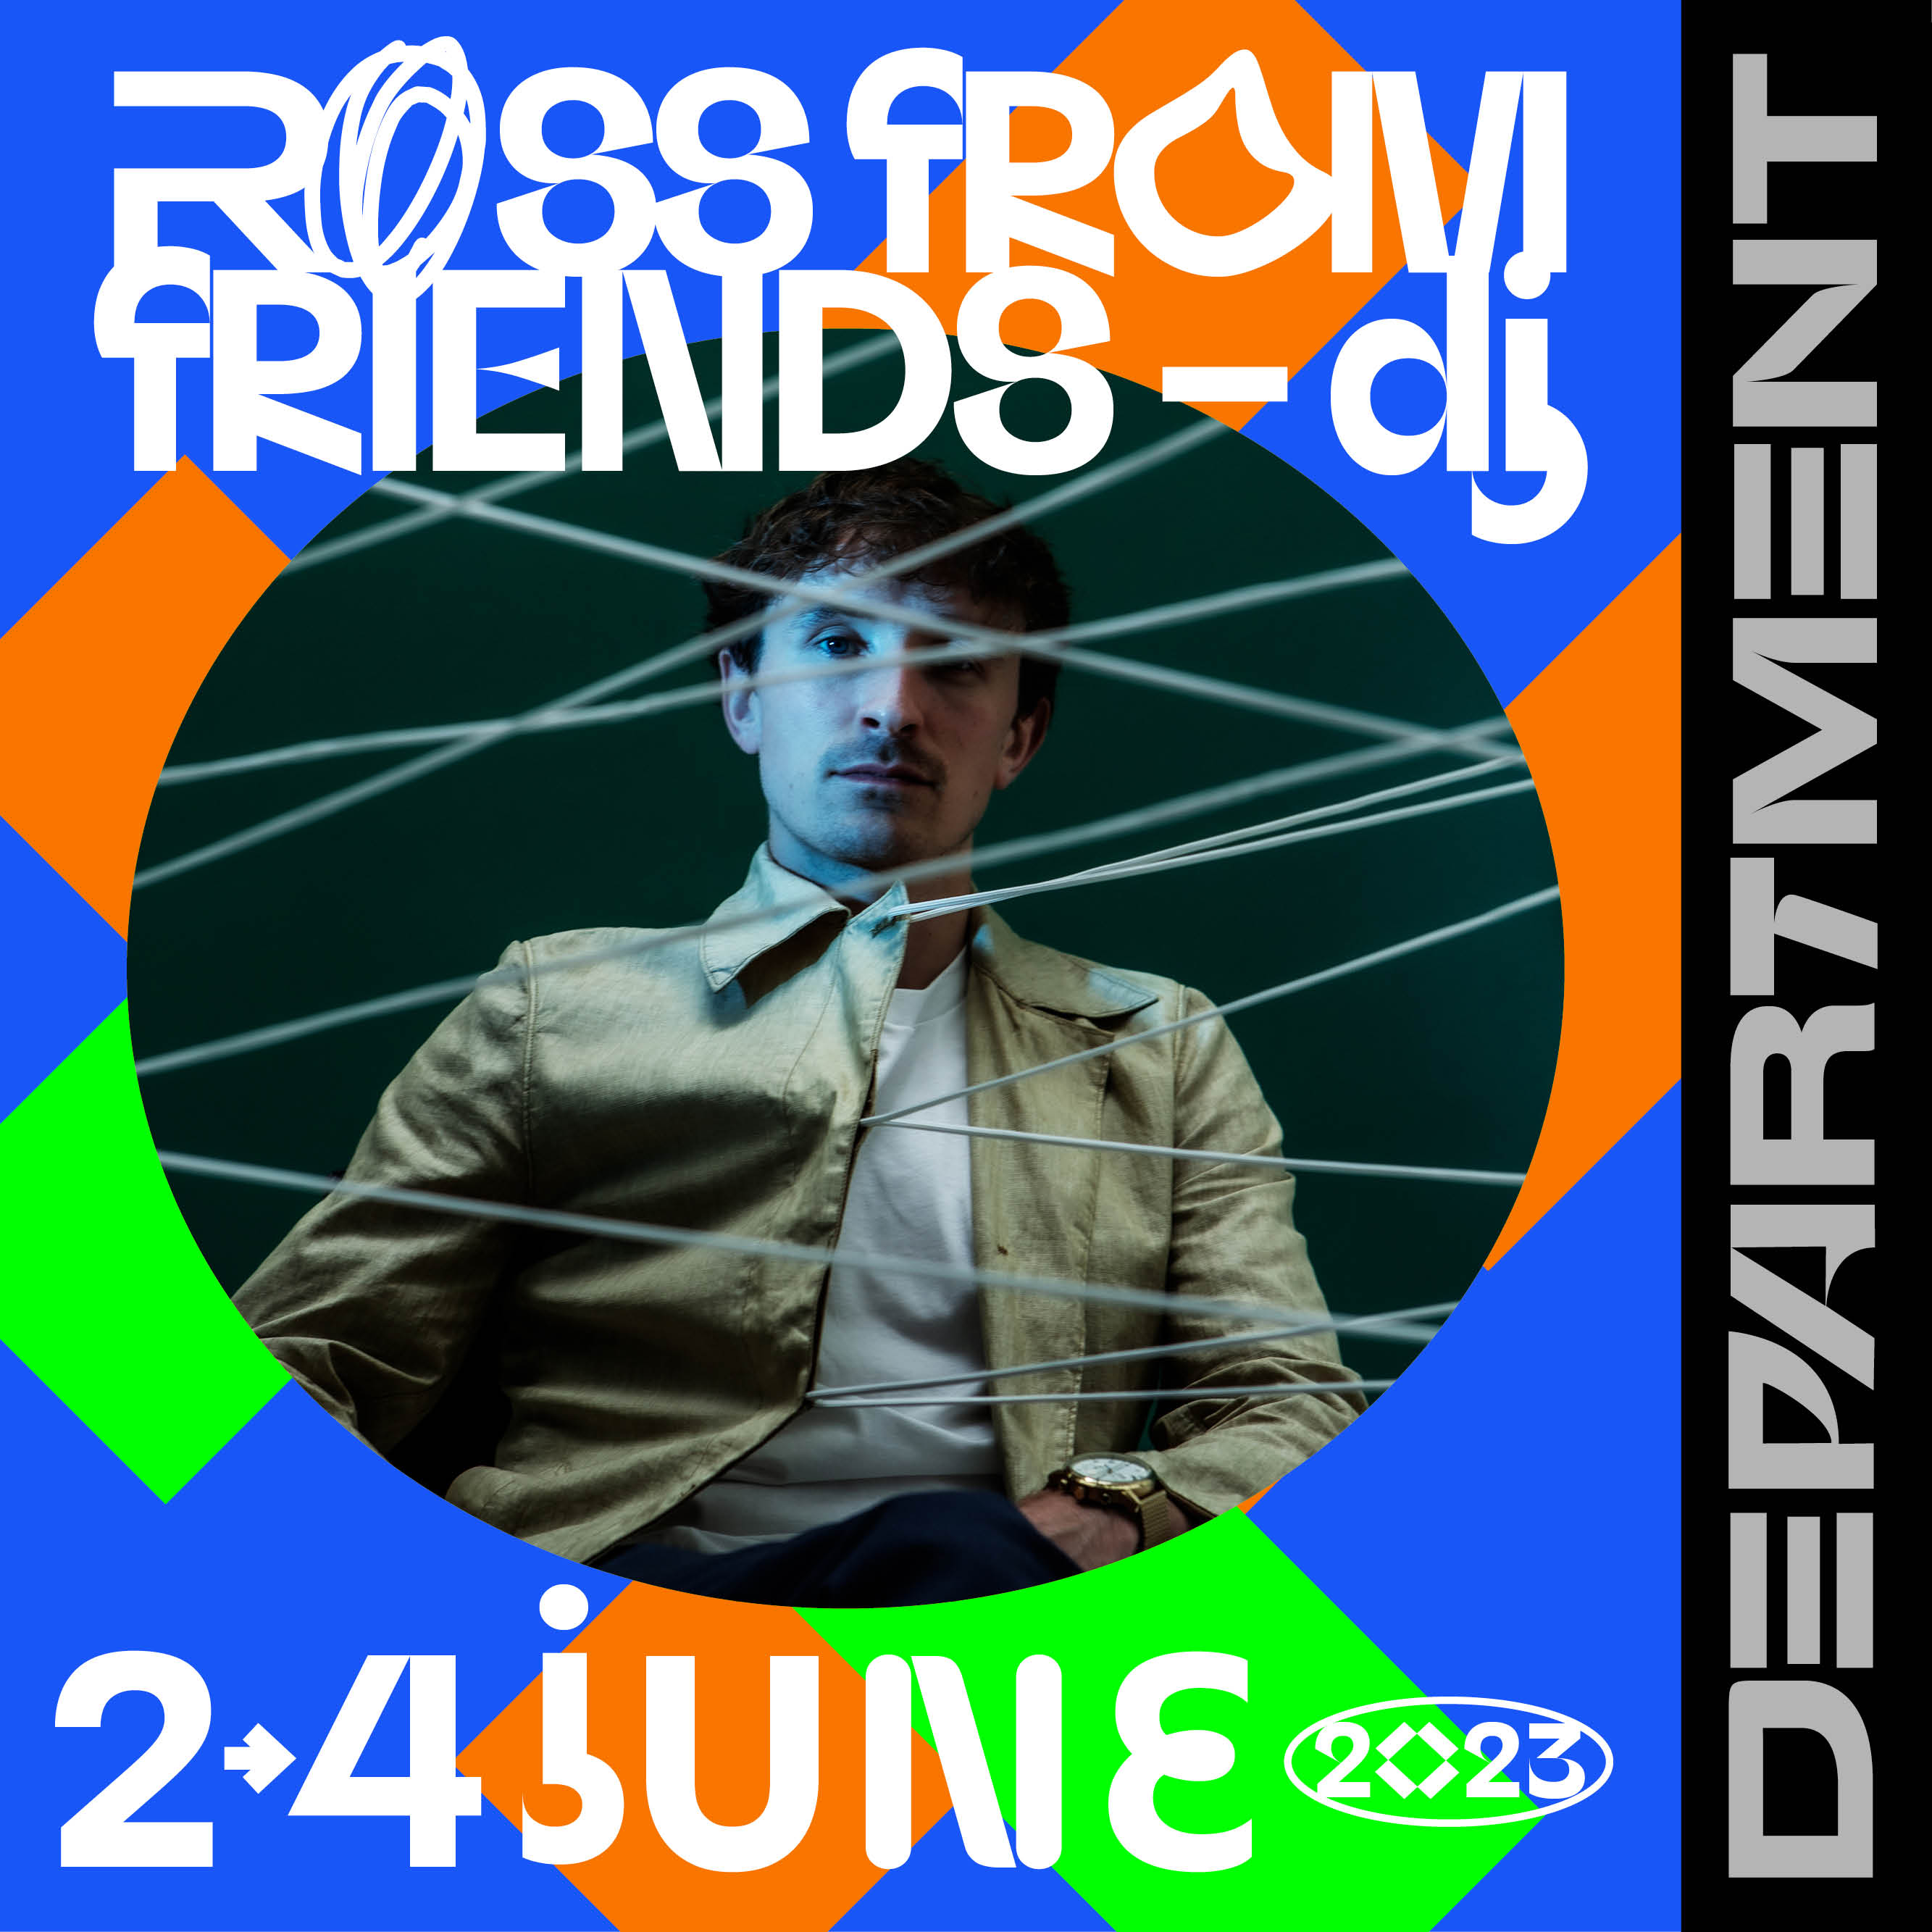 Ross From Friends - DJ Stockholm Department Festival